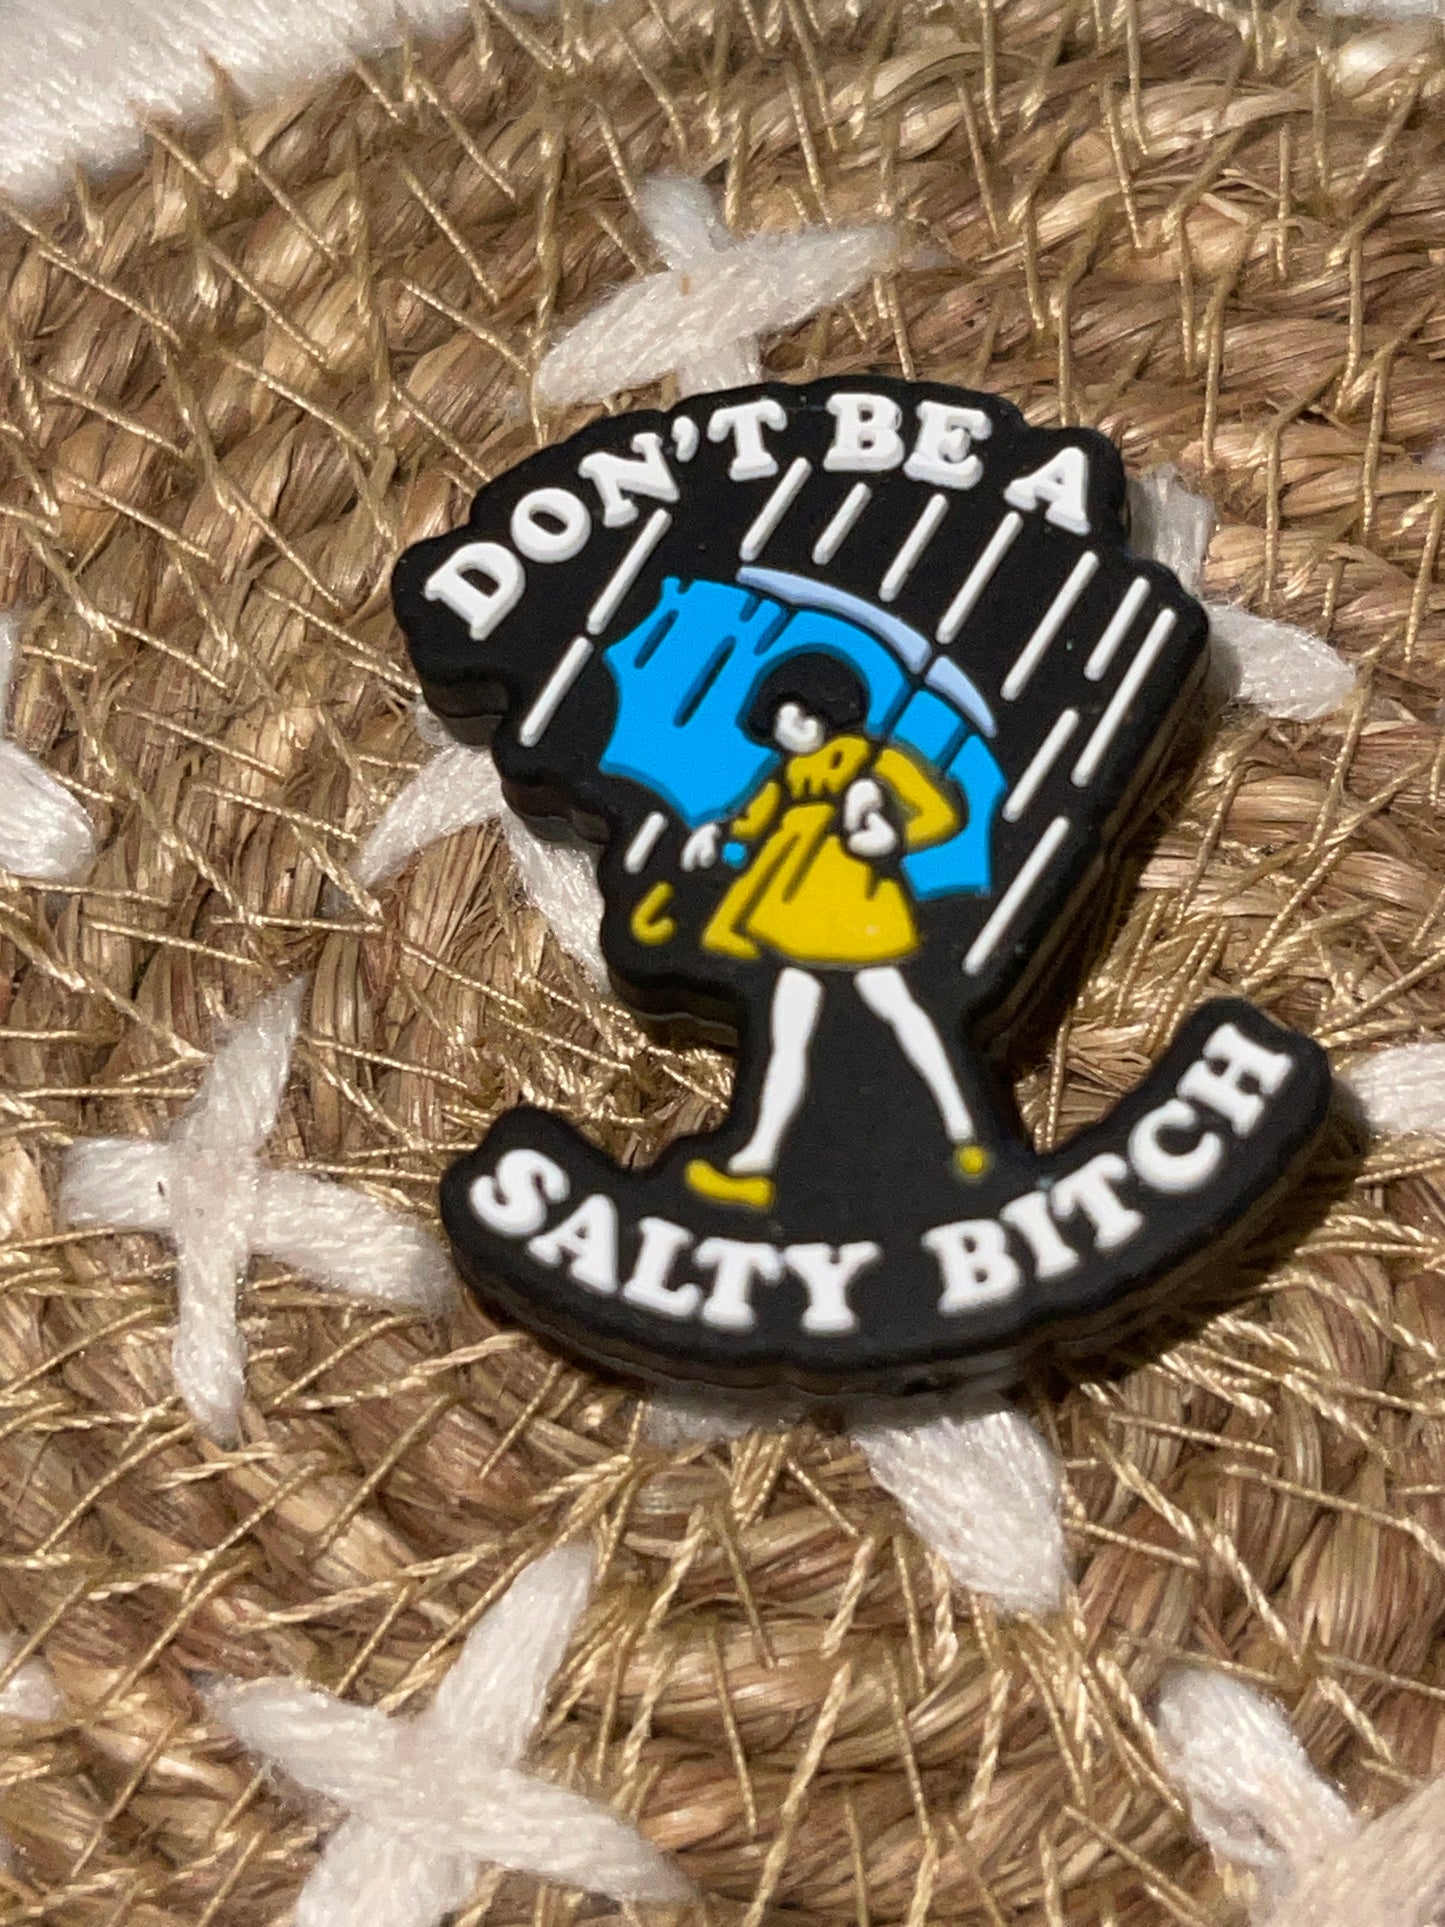 DON’T BE A SALTY BITCH SALT